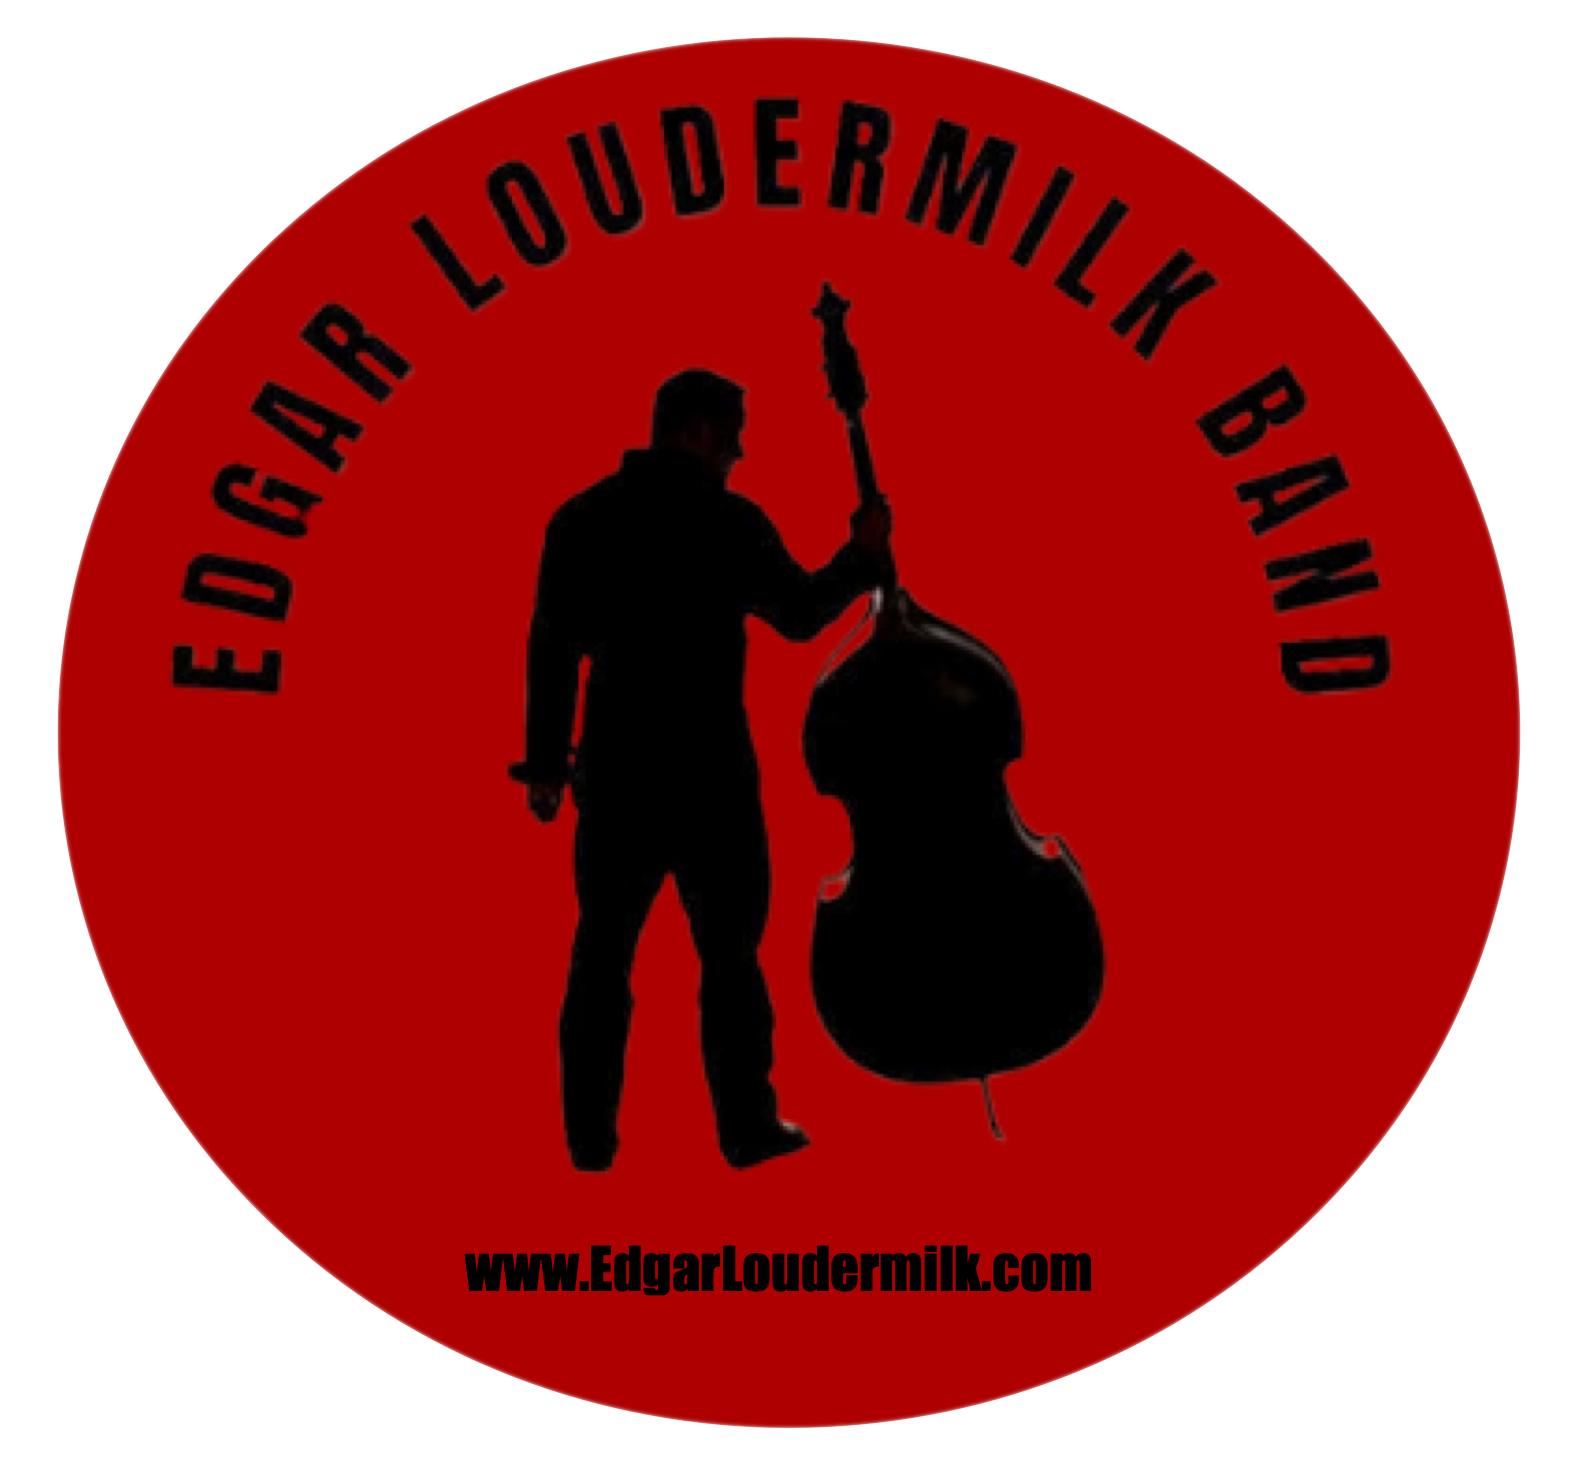 The Edgar Loudermilk Band